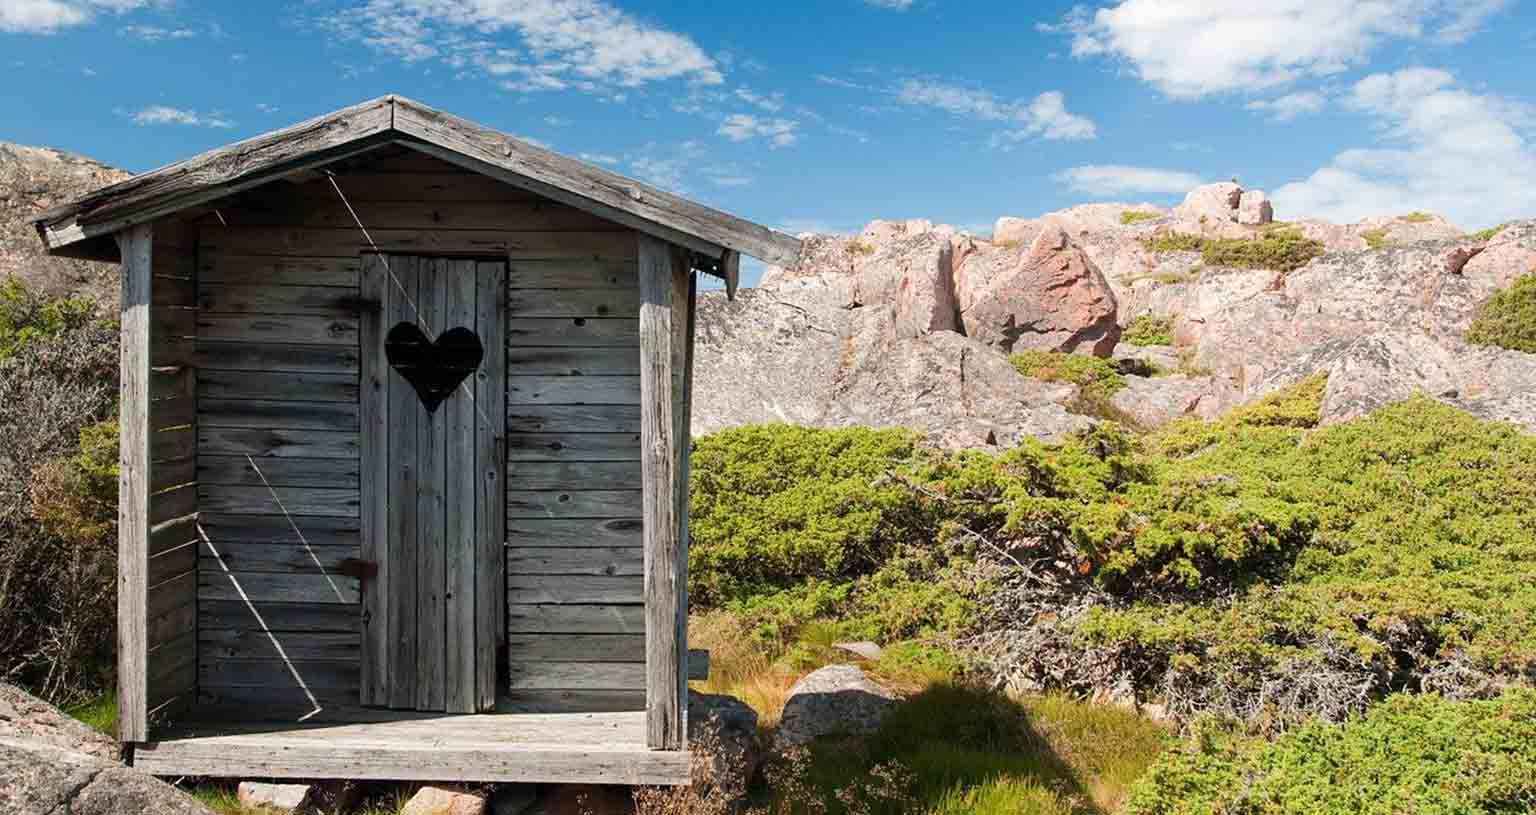 trockentrenntoilette-van-tiny-house--trockentoilette-trenntoilette-kompostklo-aussenklo